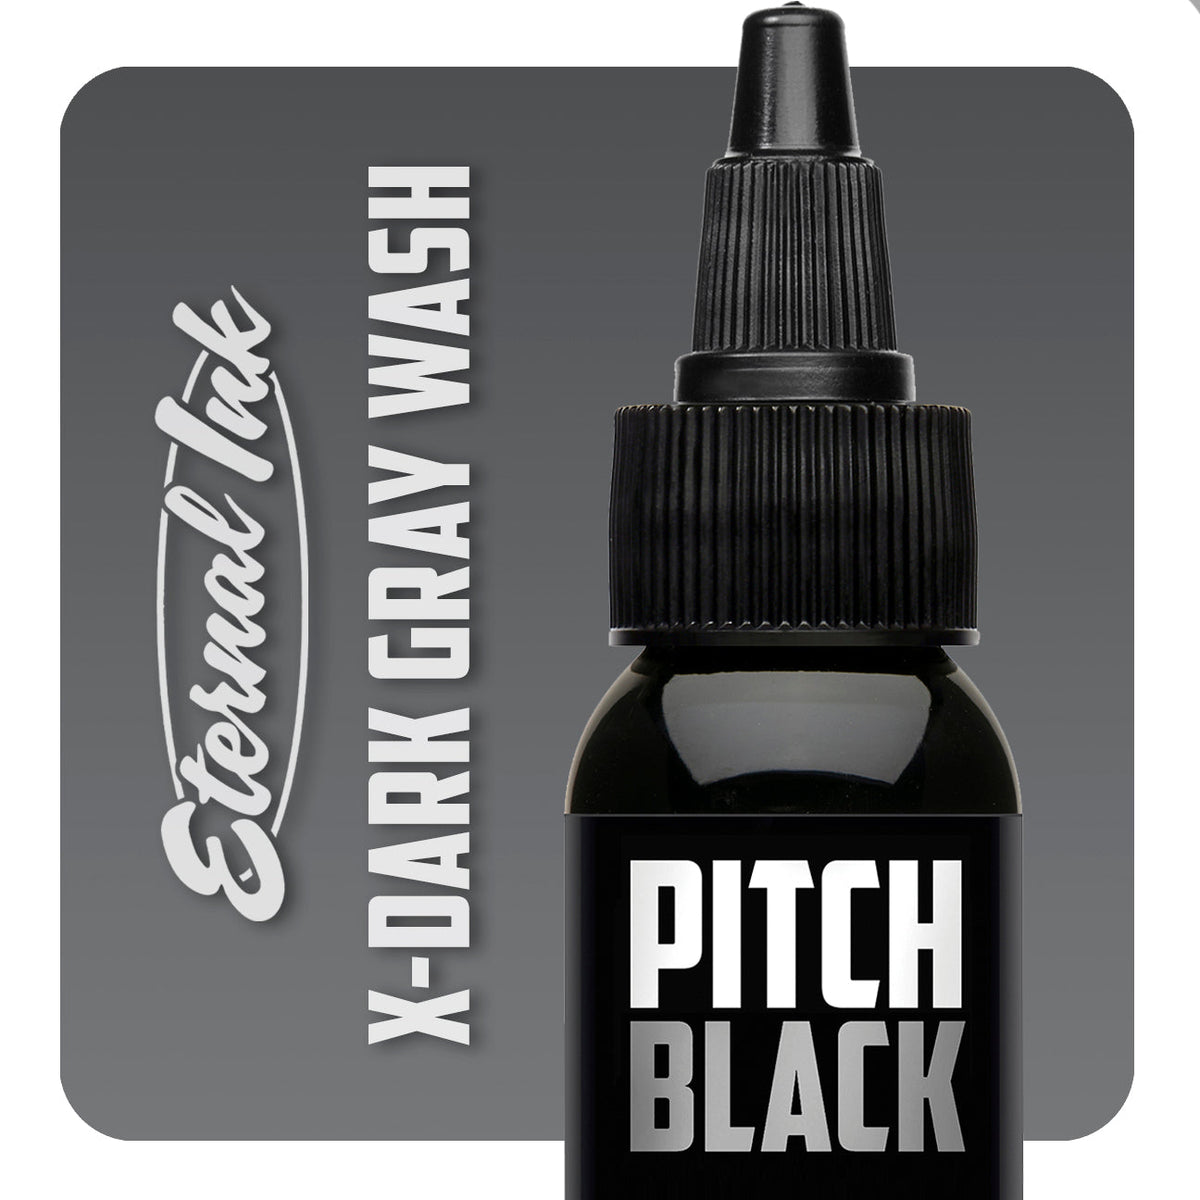 Pitch Black X-Dark Gray Wash